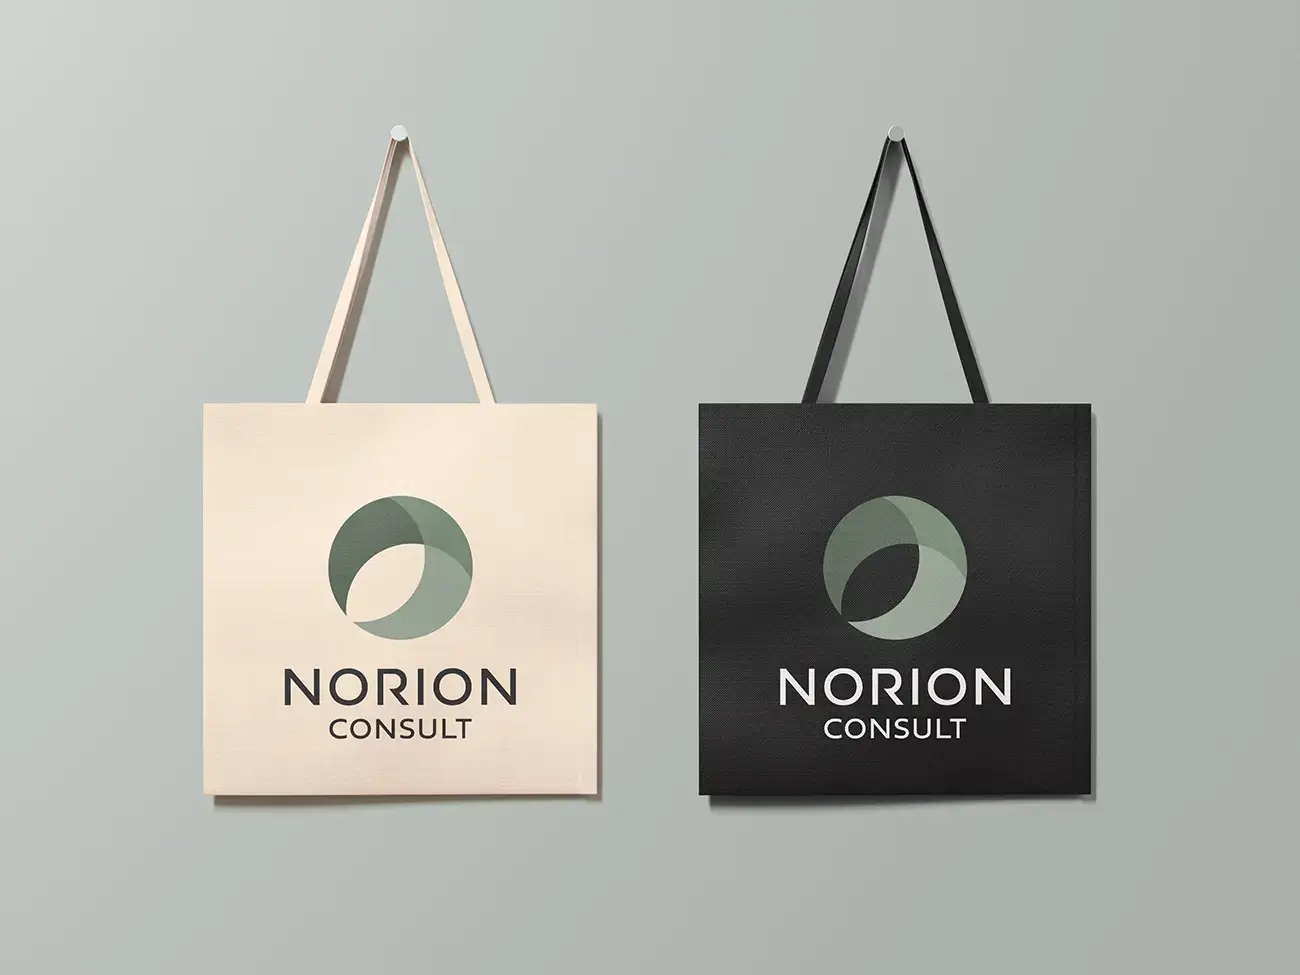 Norion consult branding